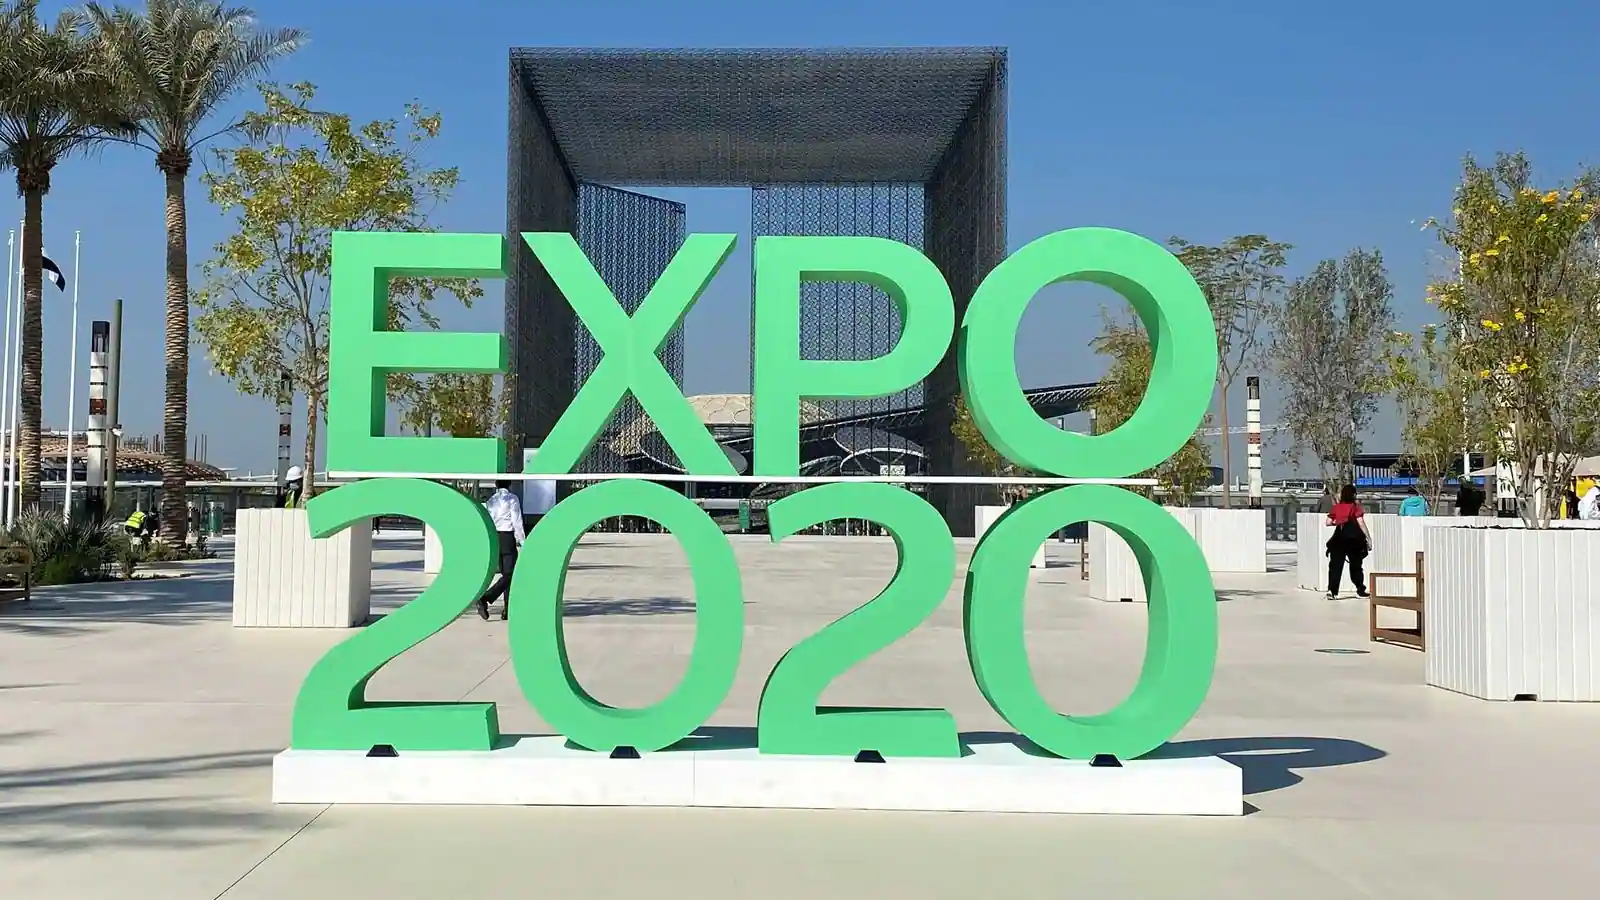 The Dubai Expo 2020 Pavilions